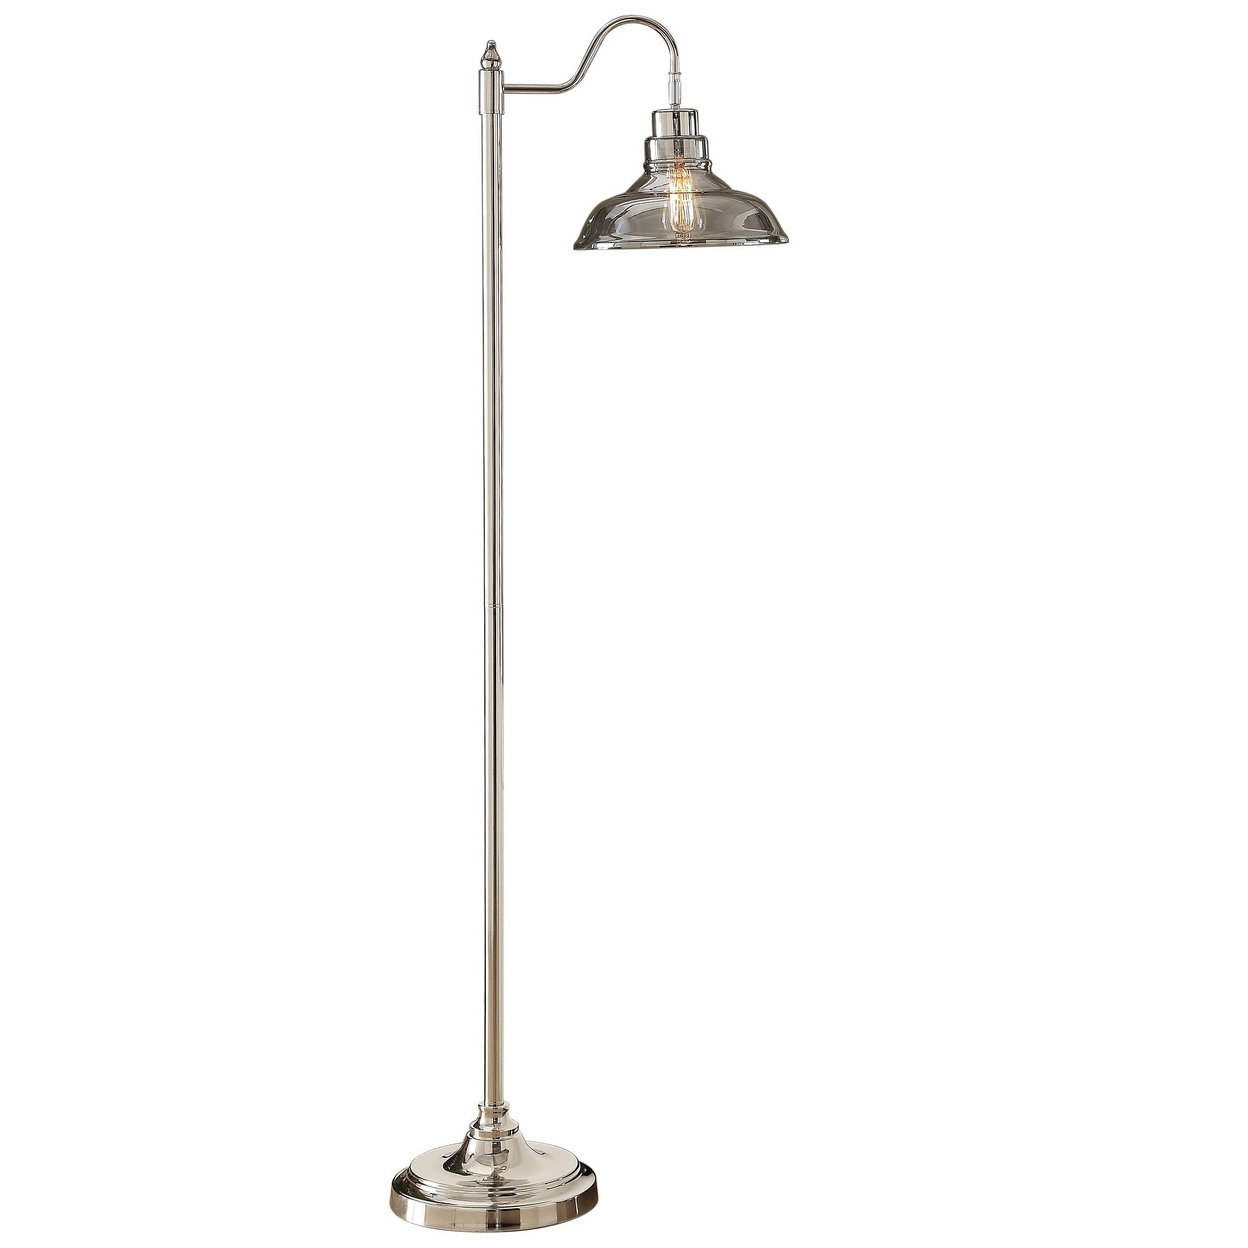 62 Inch Floor Lamp, Classic Style Dome Glass Shade, Silver Metal Base -Saltoro Sherpi